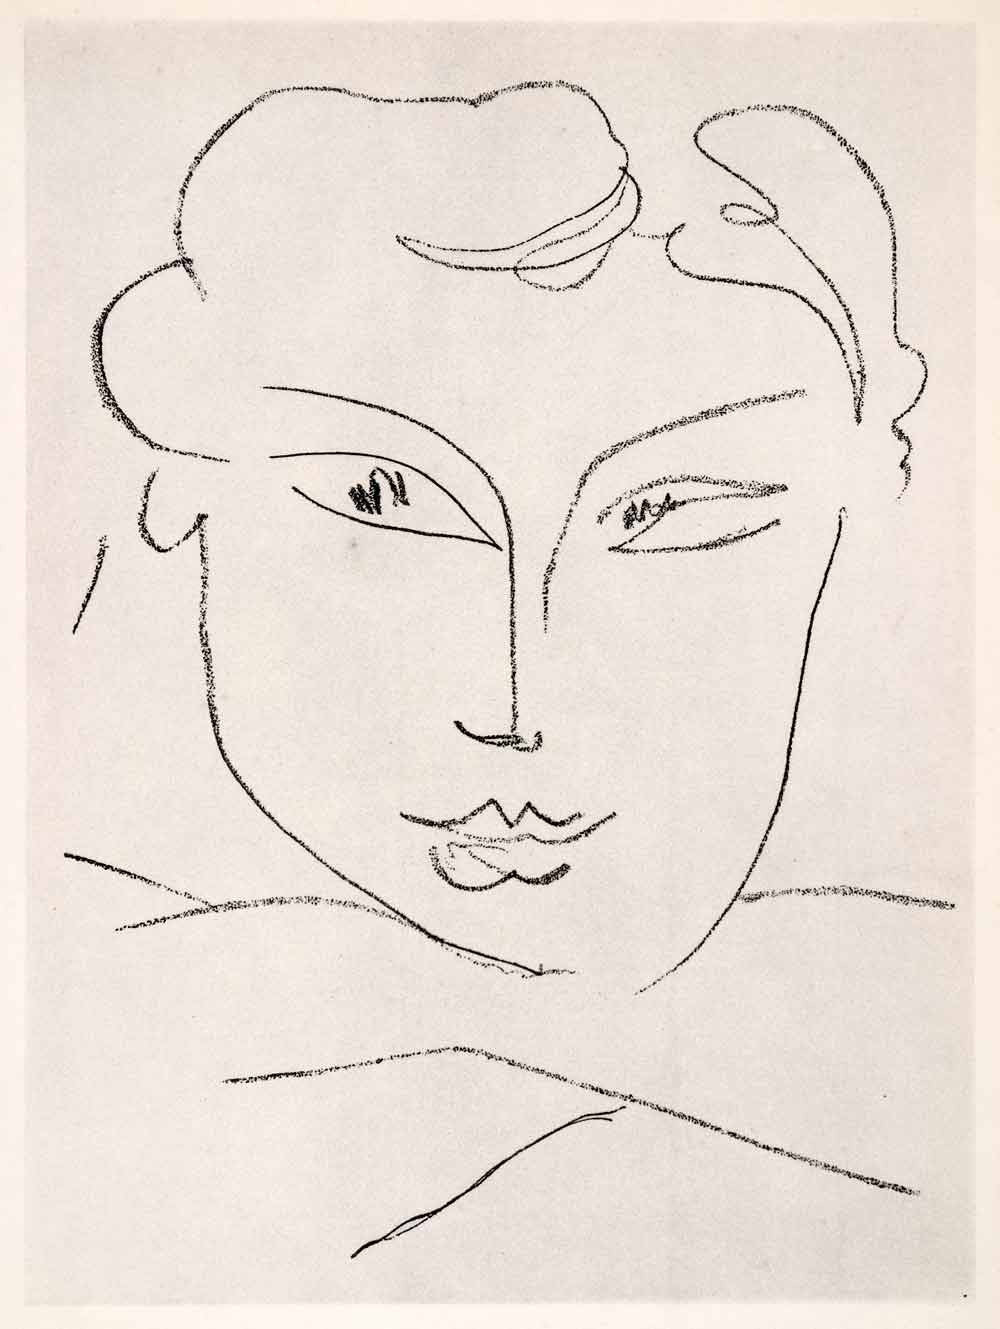 1969 Photolithograph Matisse Girl's Head Face Portrait Pencil Sketch Modern Art - Period Paper
